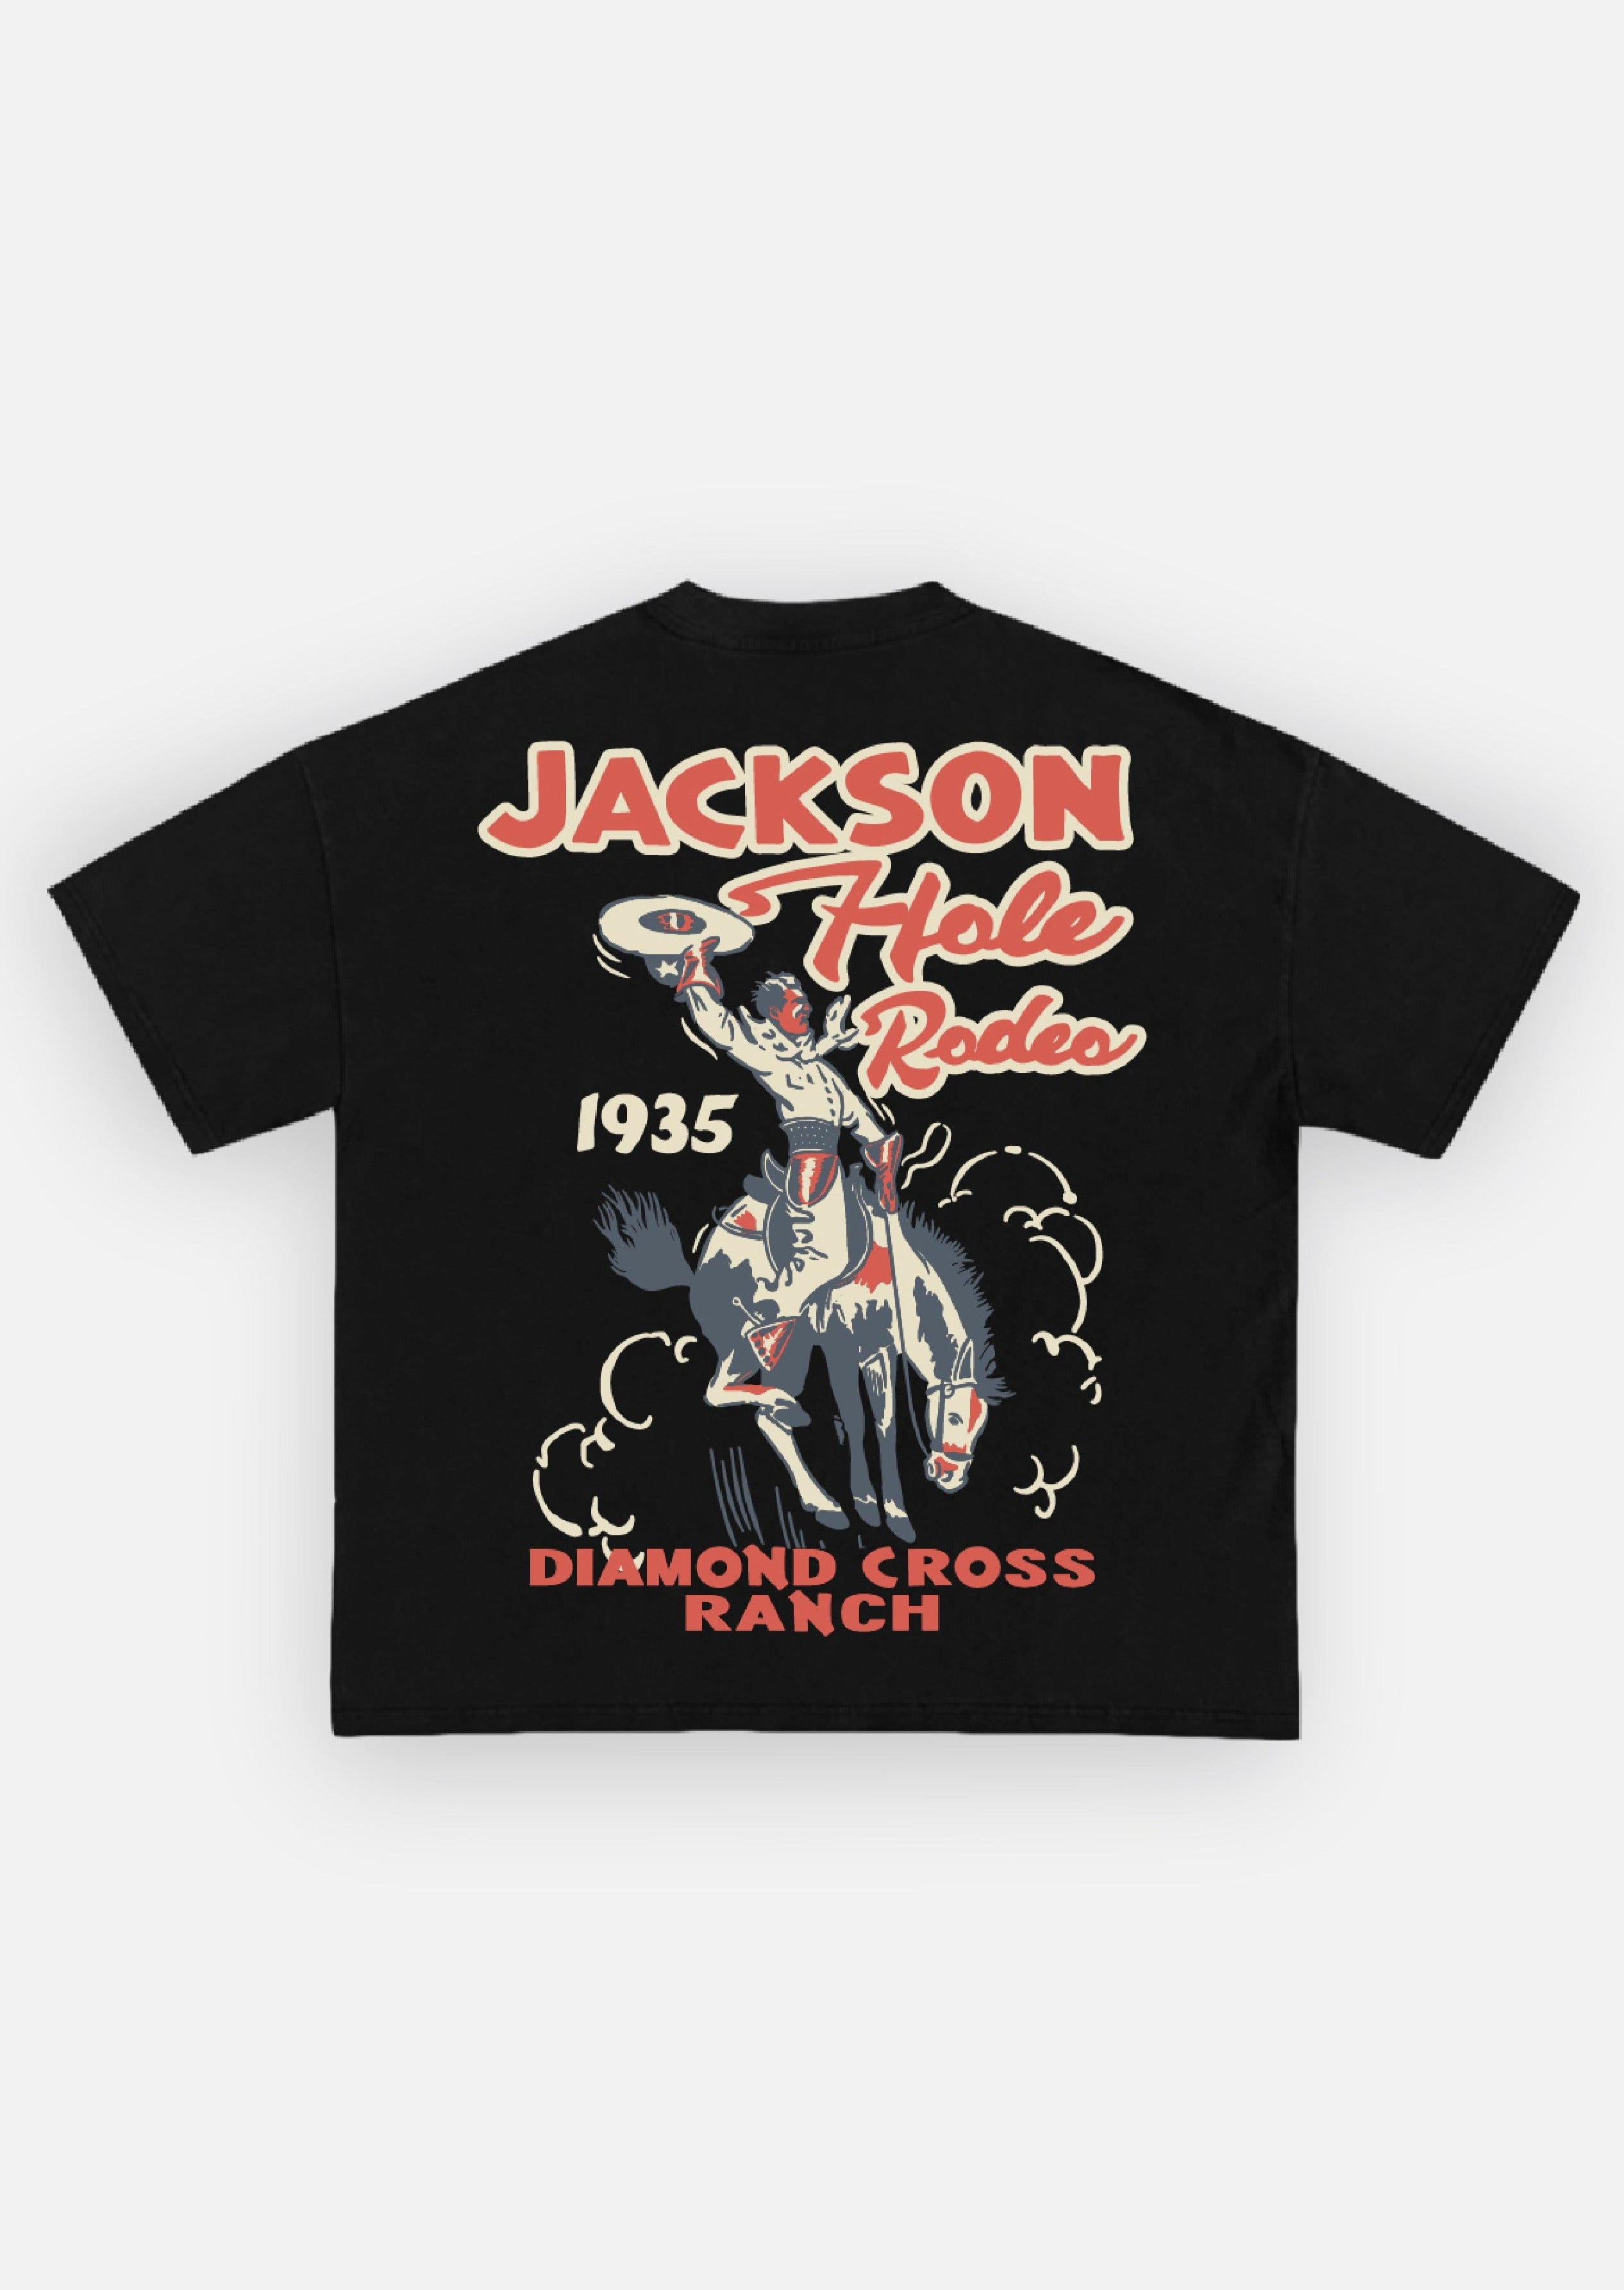 Jackson Rodeo